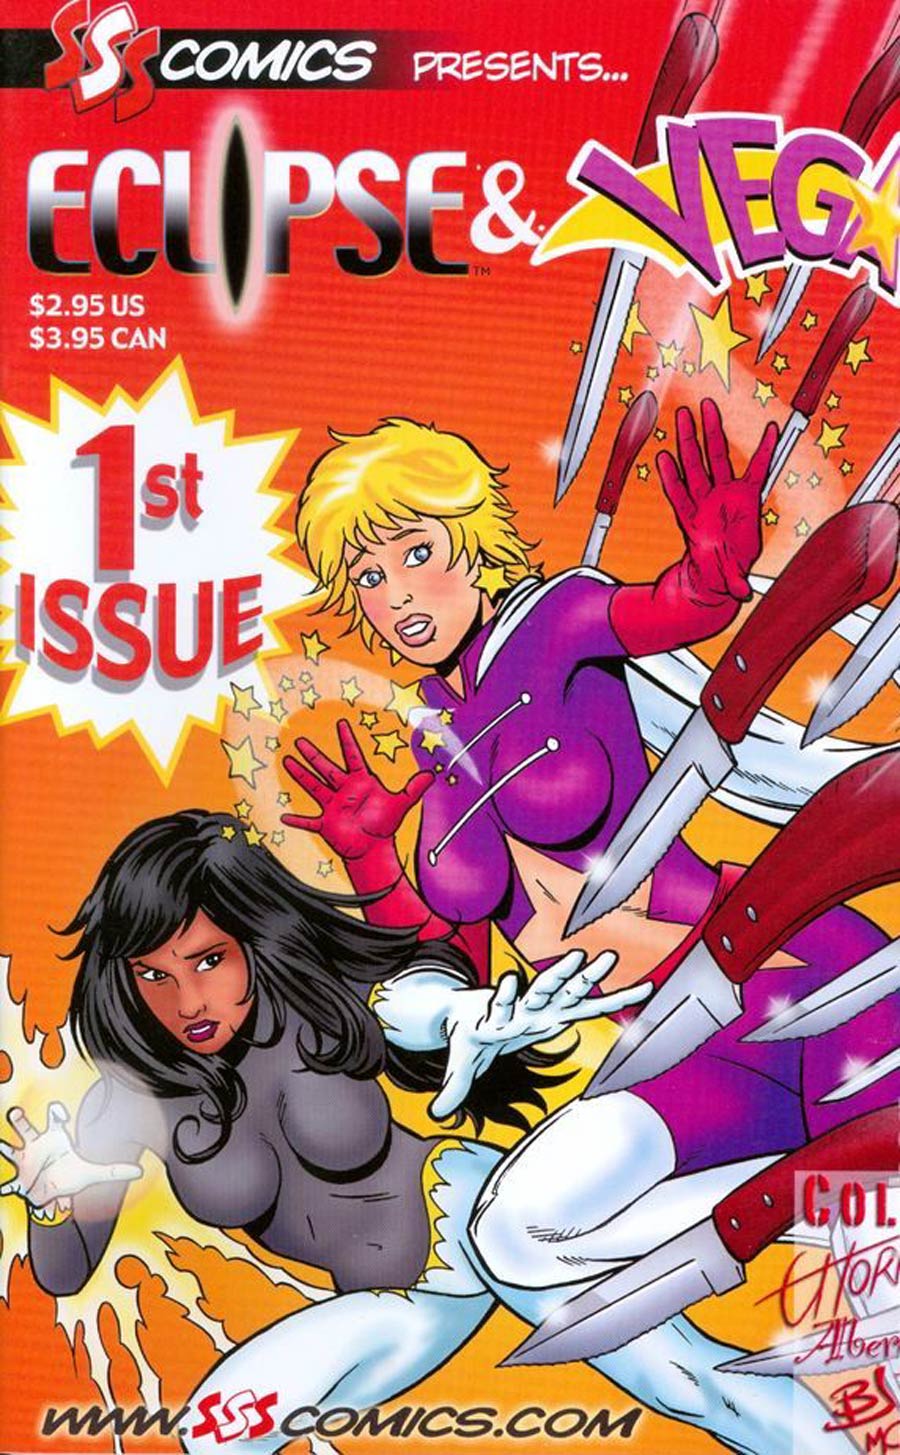 SSS Comics Presents Eclipse And Vega #1